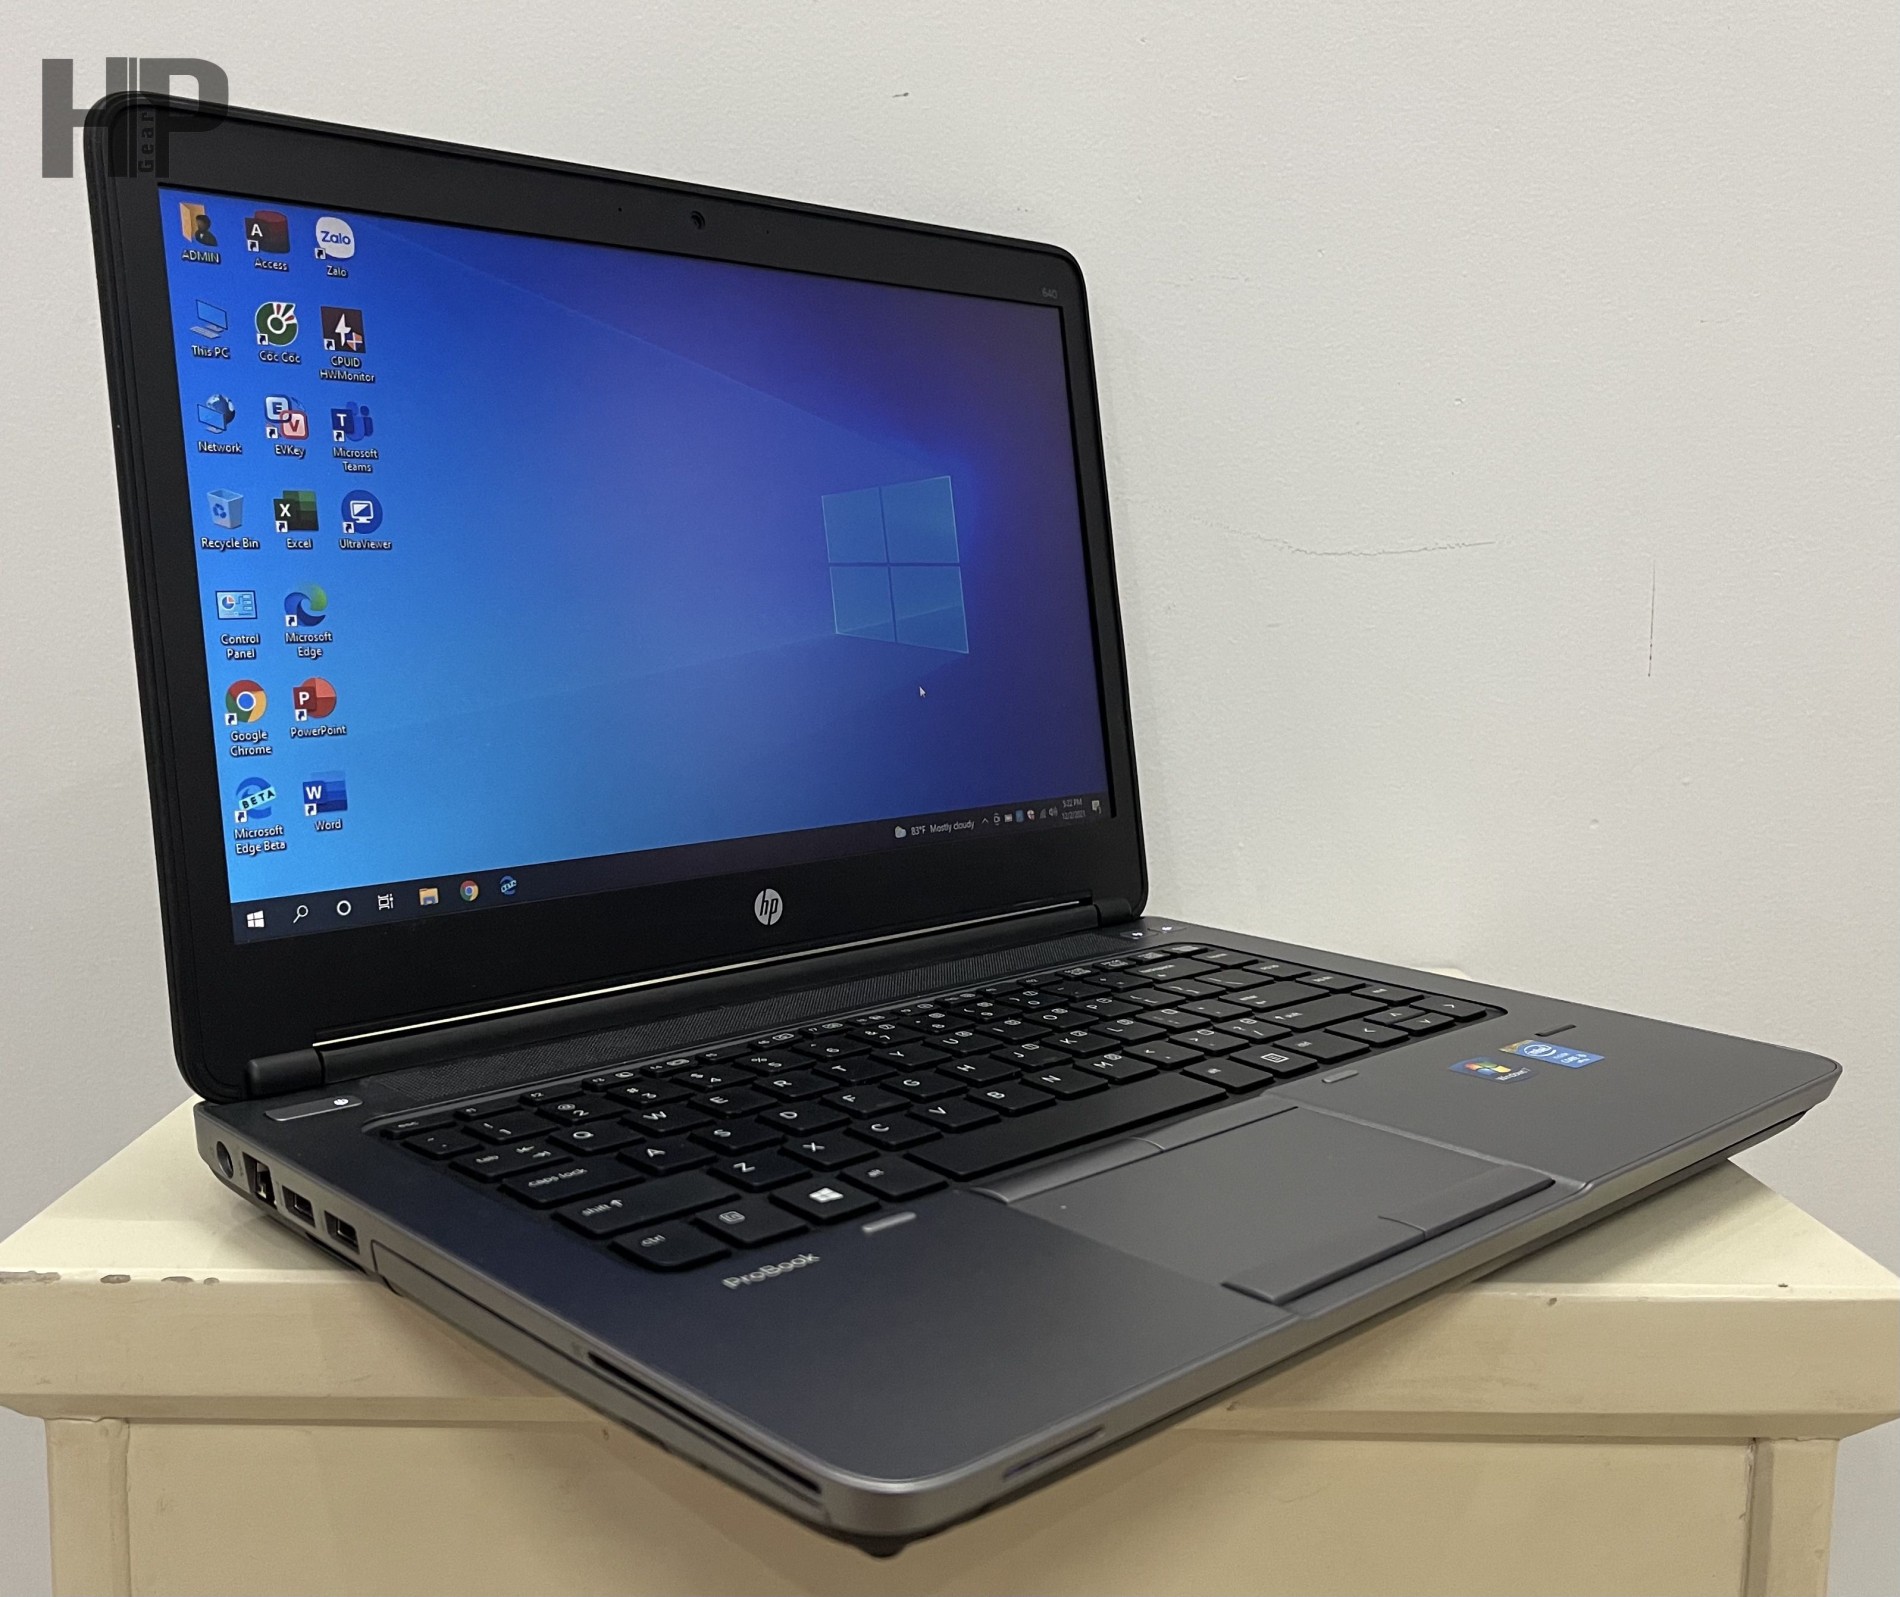 Laptop HP 640 G1 - i5 4300M (like new 98%)